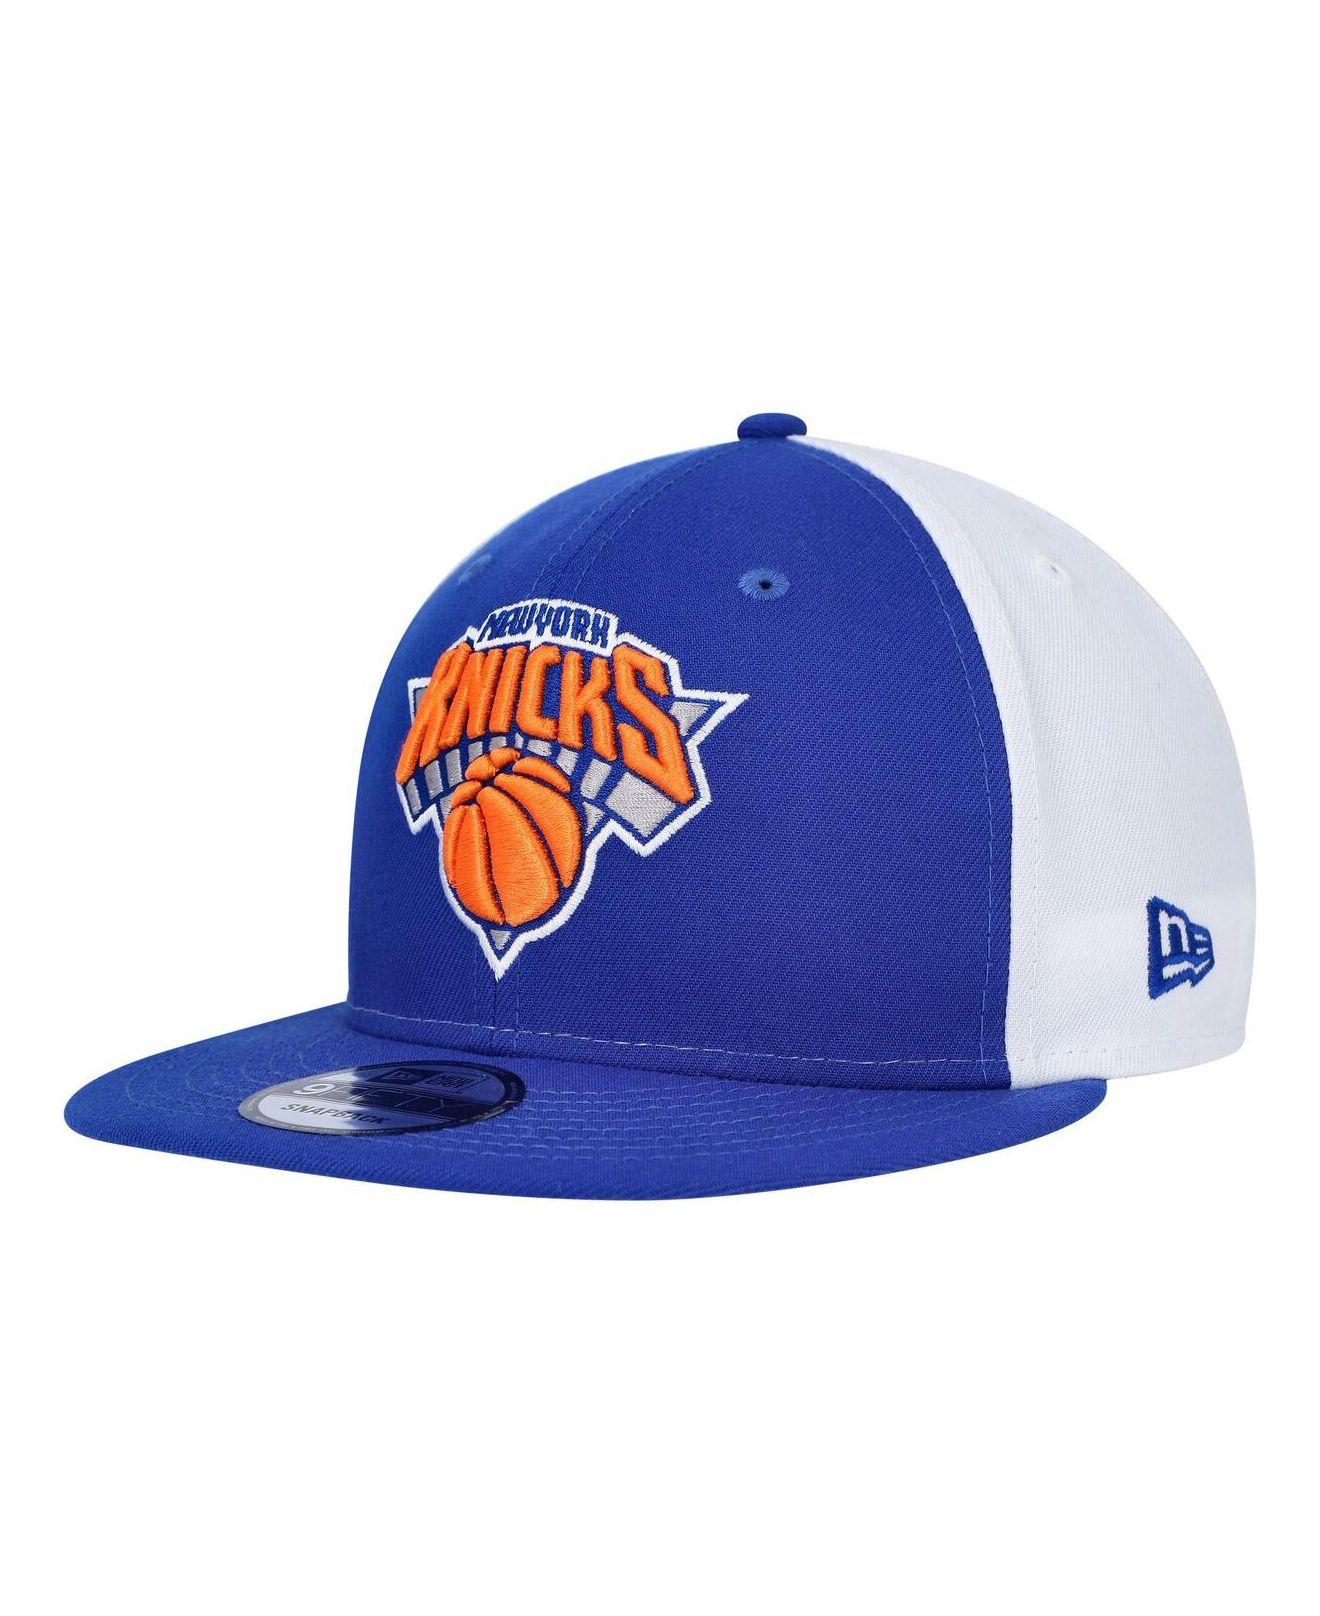 Men's New Era White York Knicks Team Stack 9FIFTY Snapback Hat